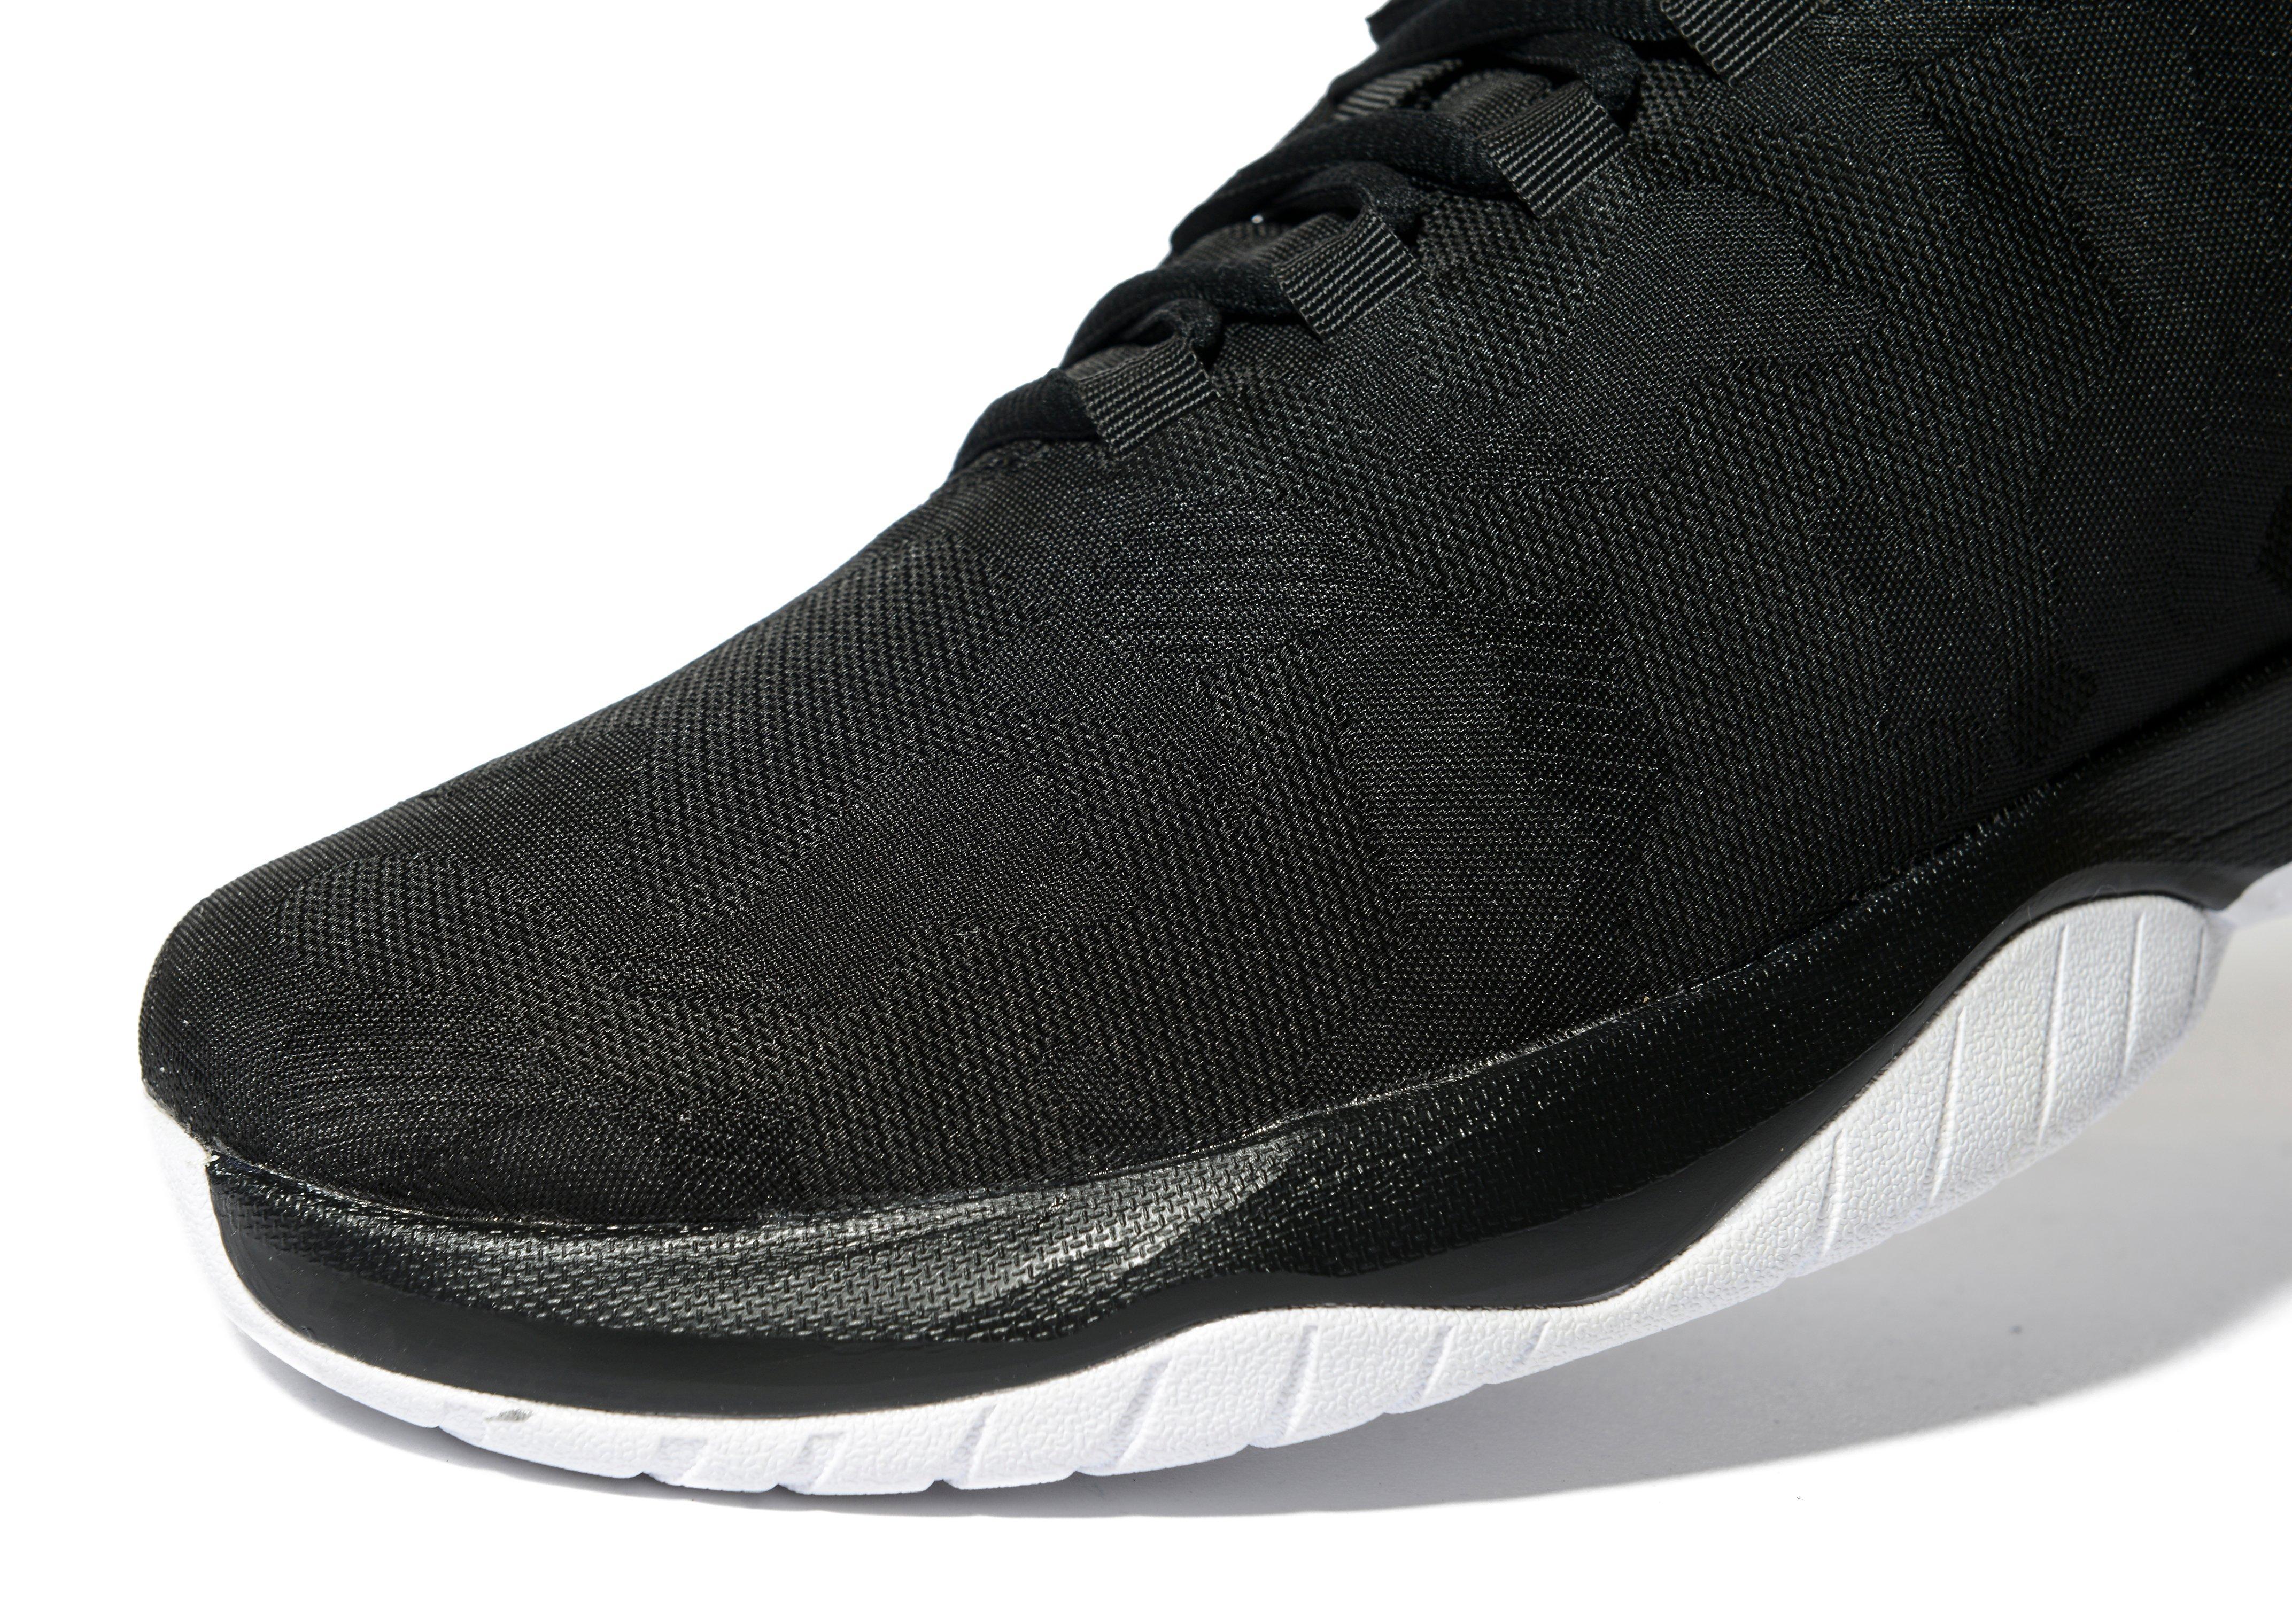 Nike Synthetic Jordan B.fly Camo in Black/White (Black) for Men - Lyst